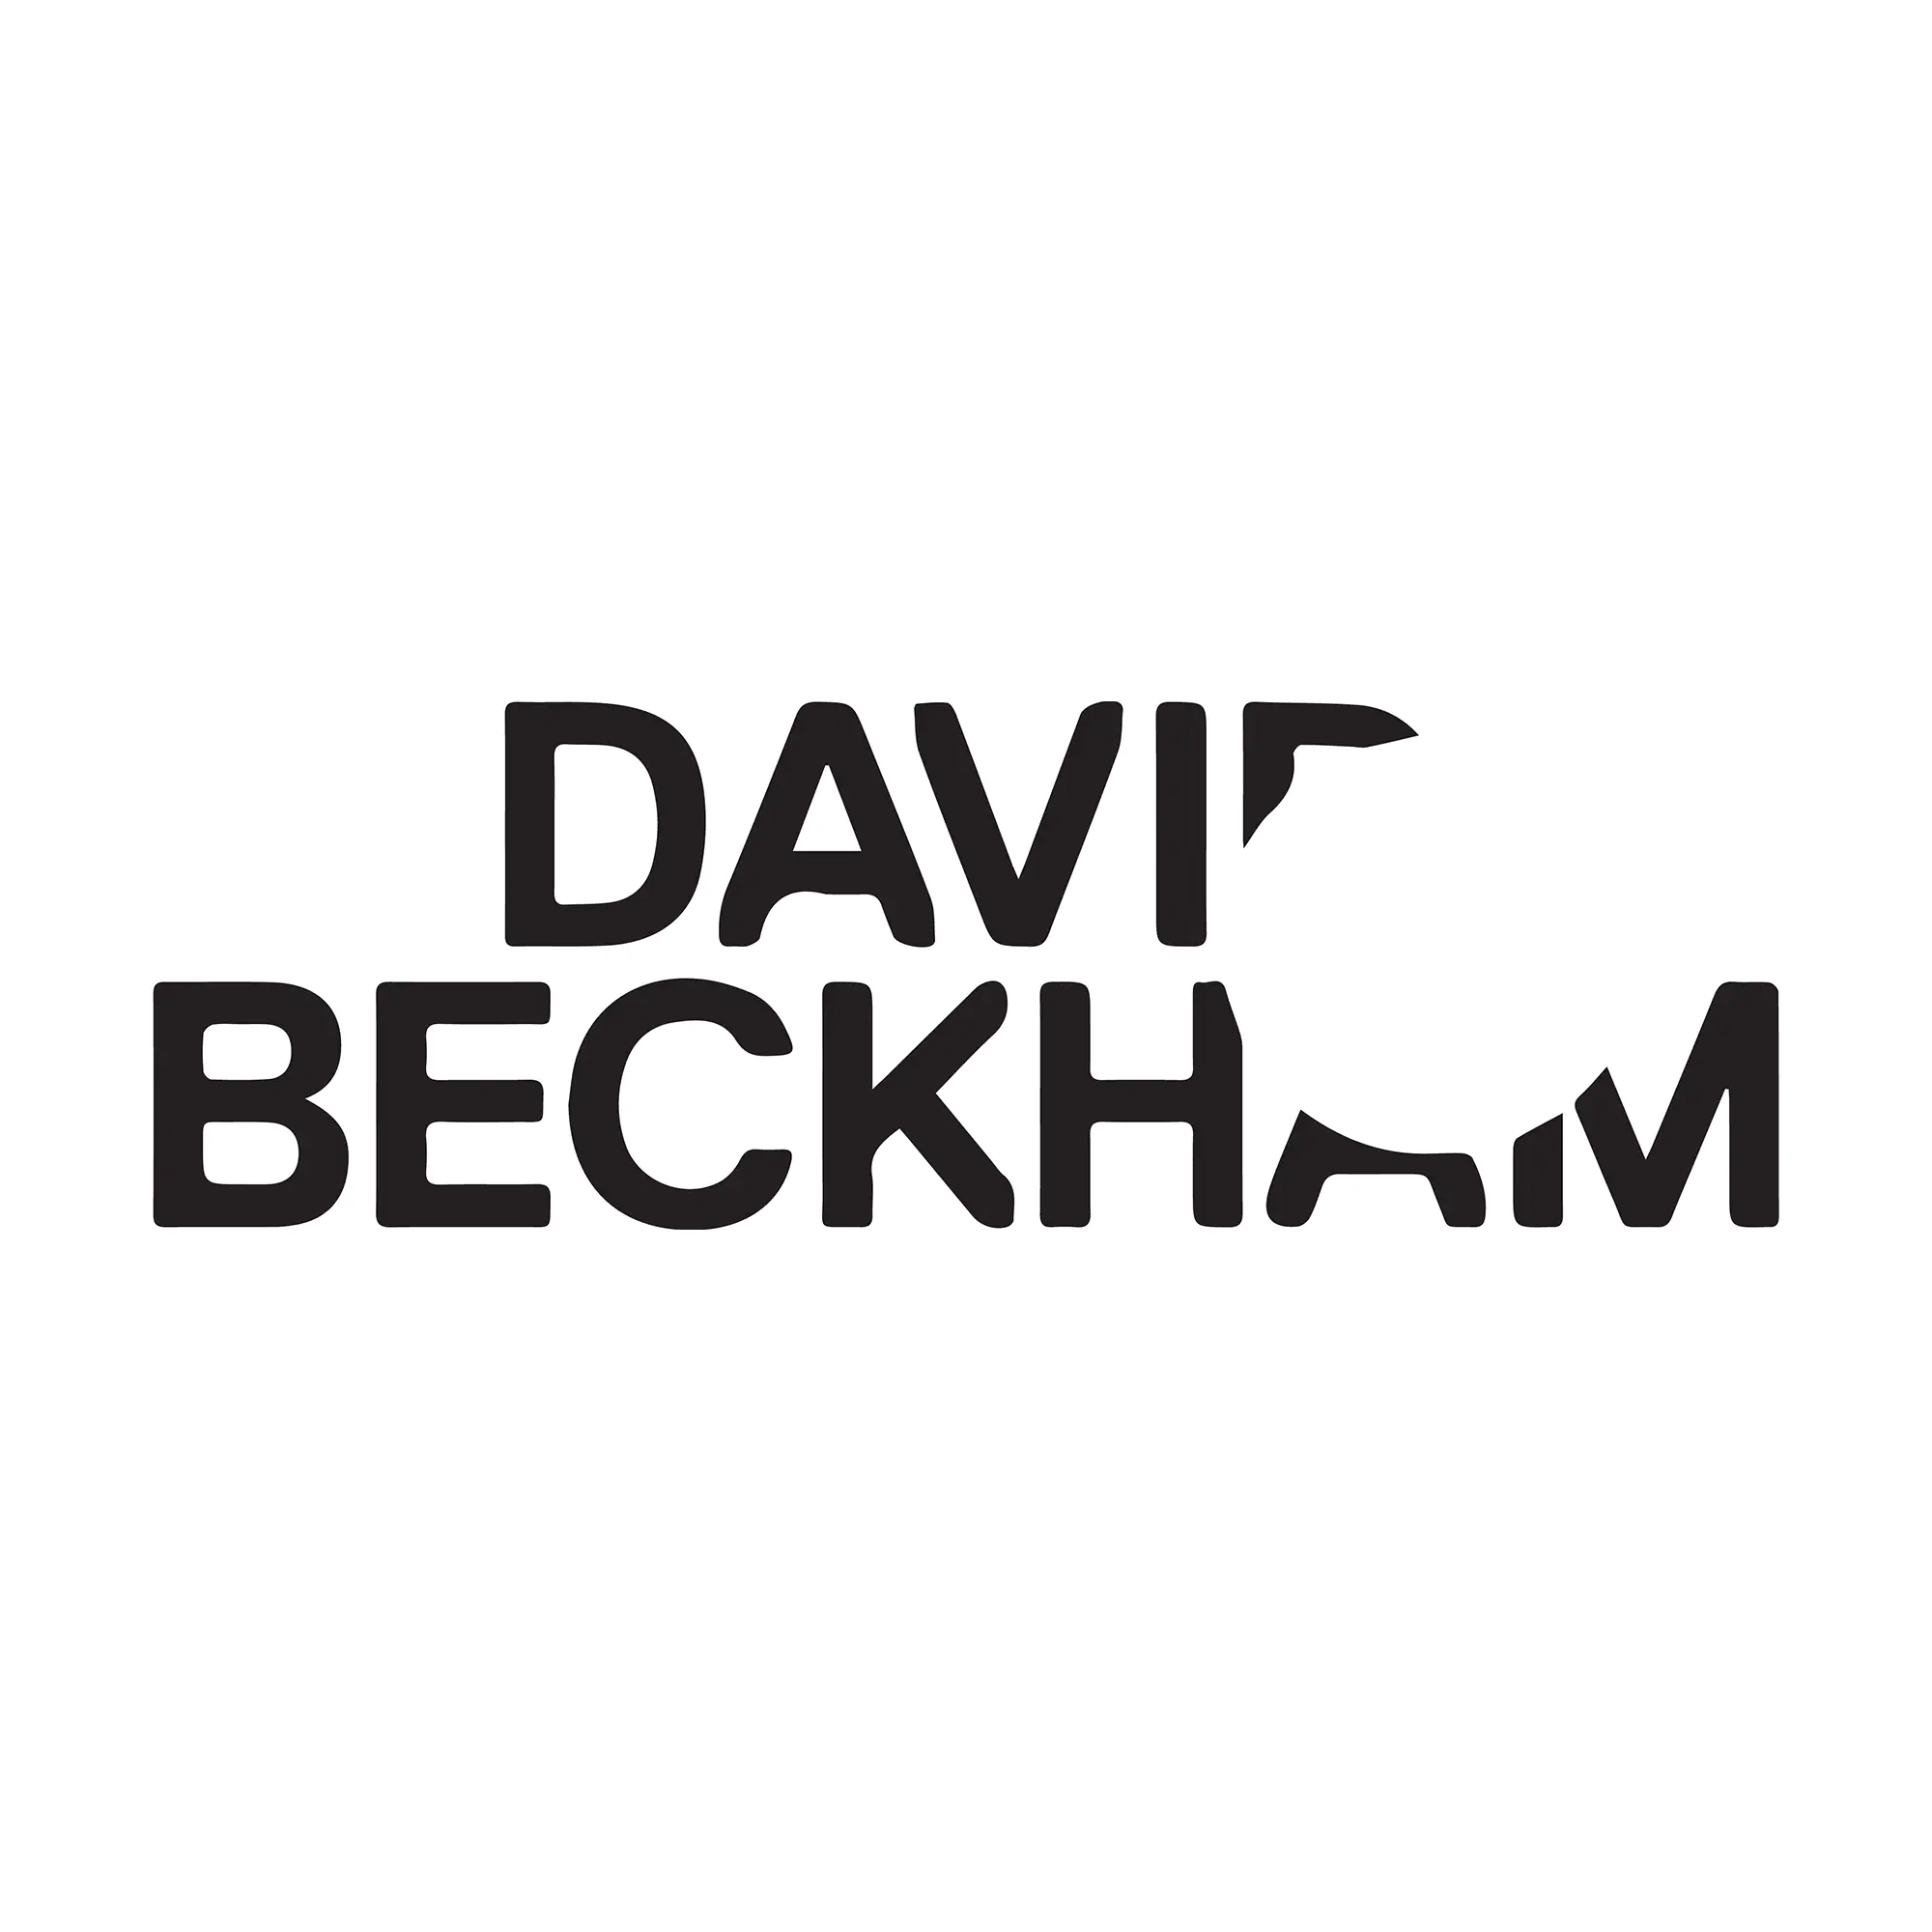 David Beckham Respect EDT | Femme Fatale - Femme Fatale - 